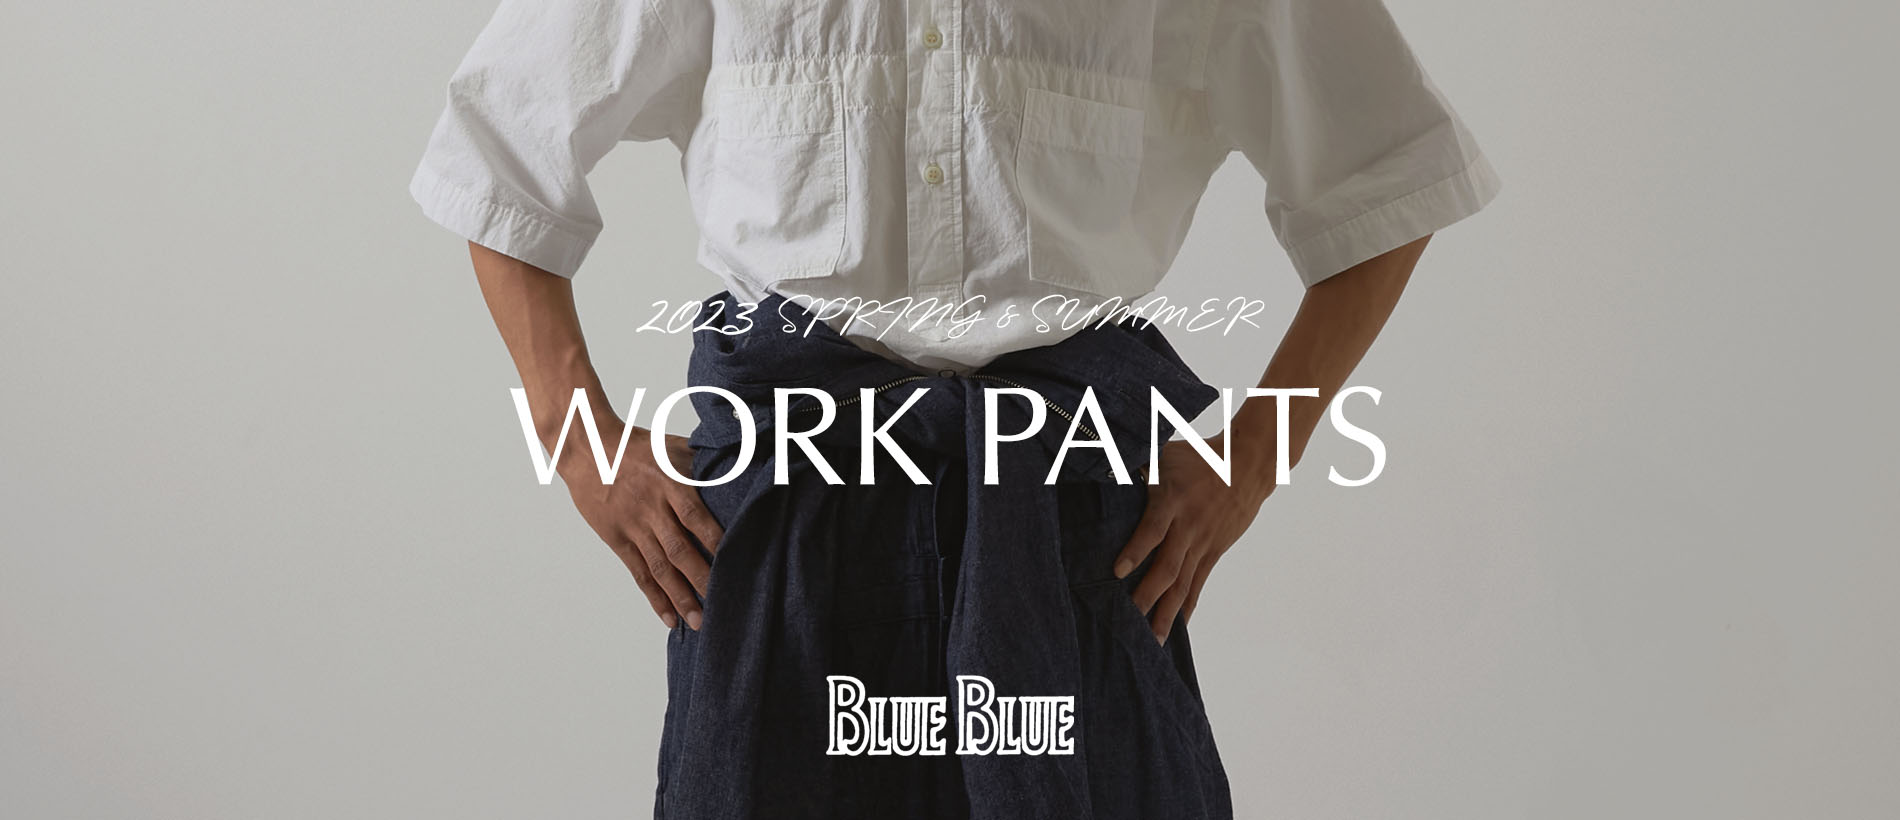 BLUE BLUE WORK PANTS